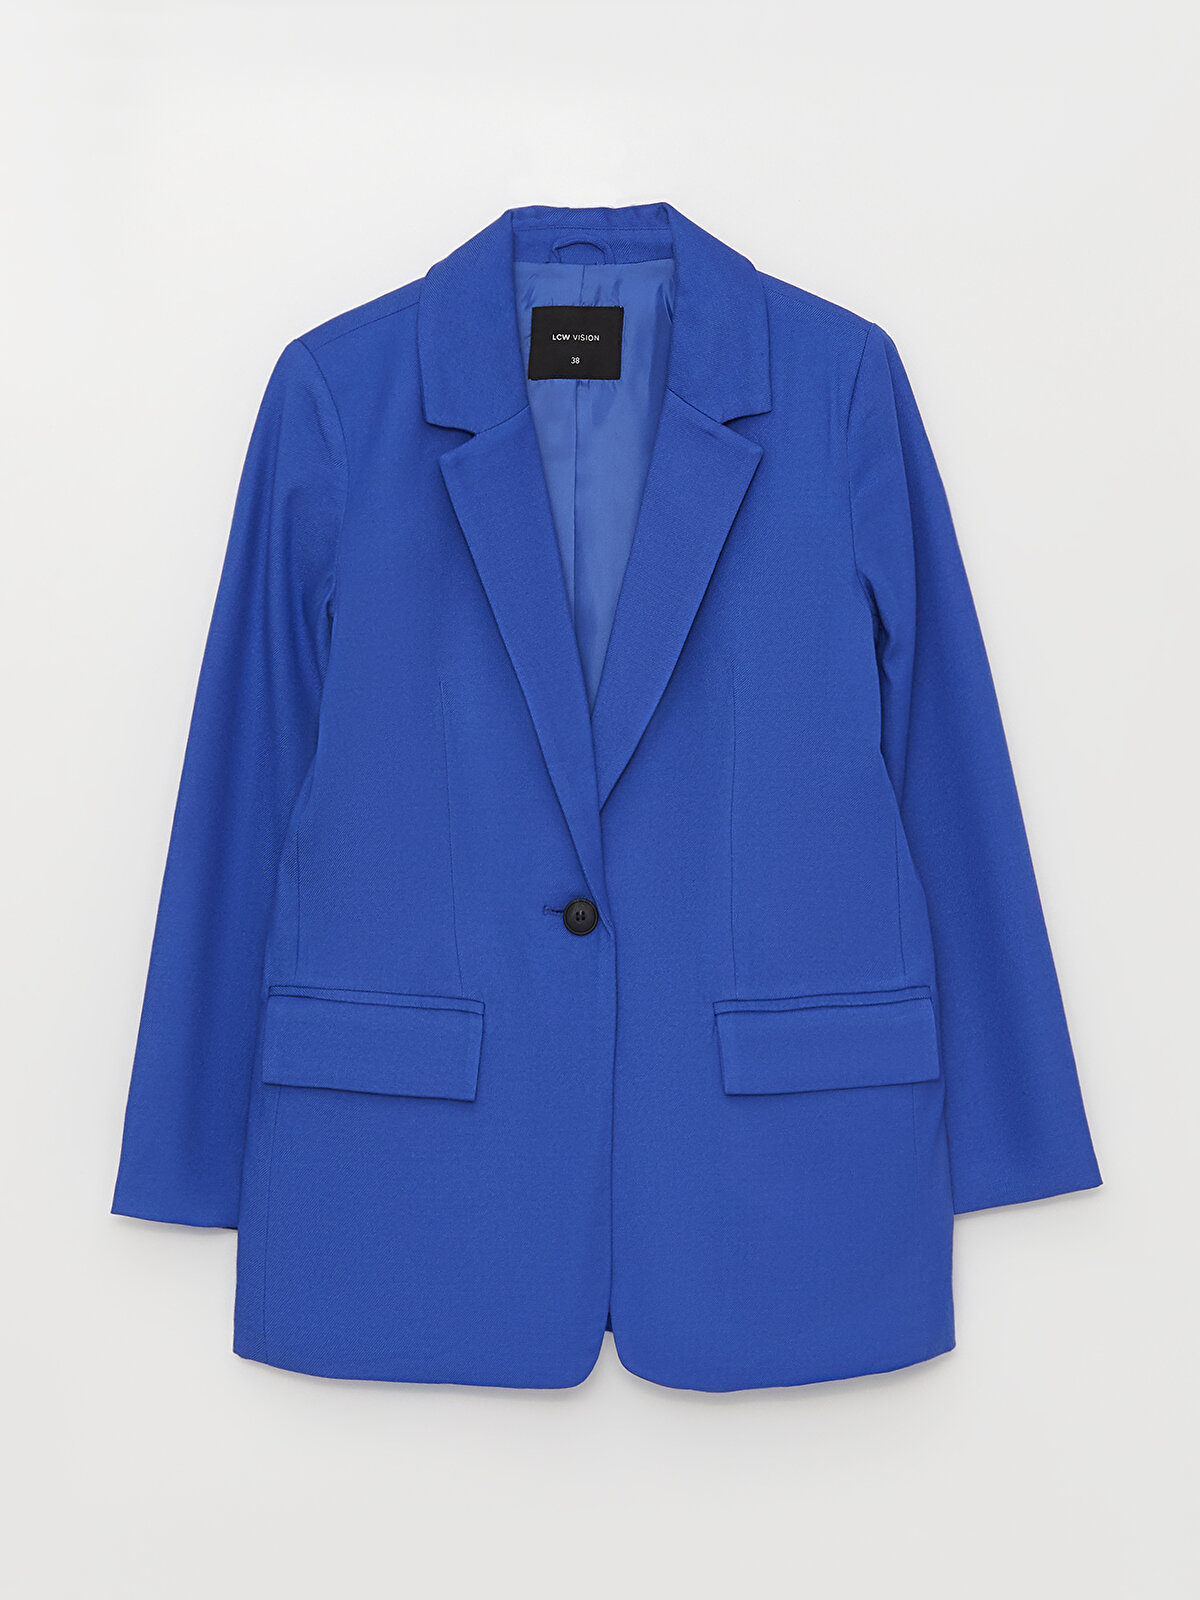 Regular Long Sleeve Women's Blazer Jacket -S36425Z8-GZ1 - S36425Z8 